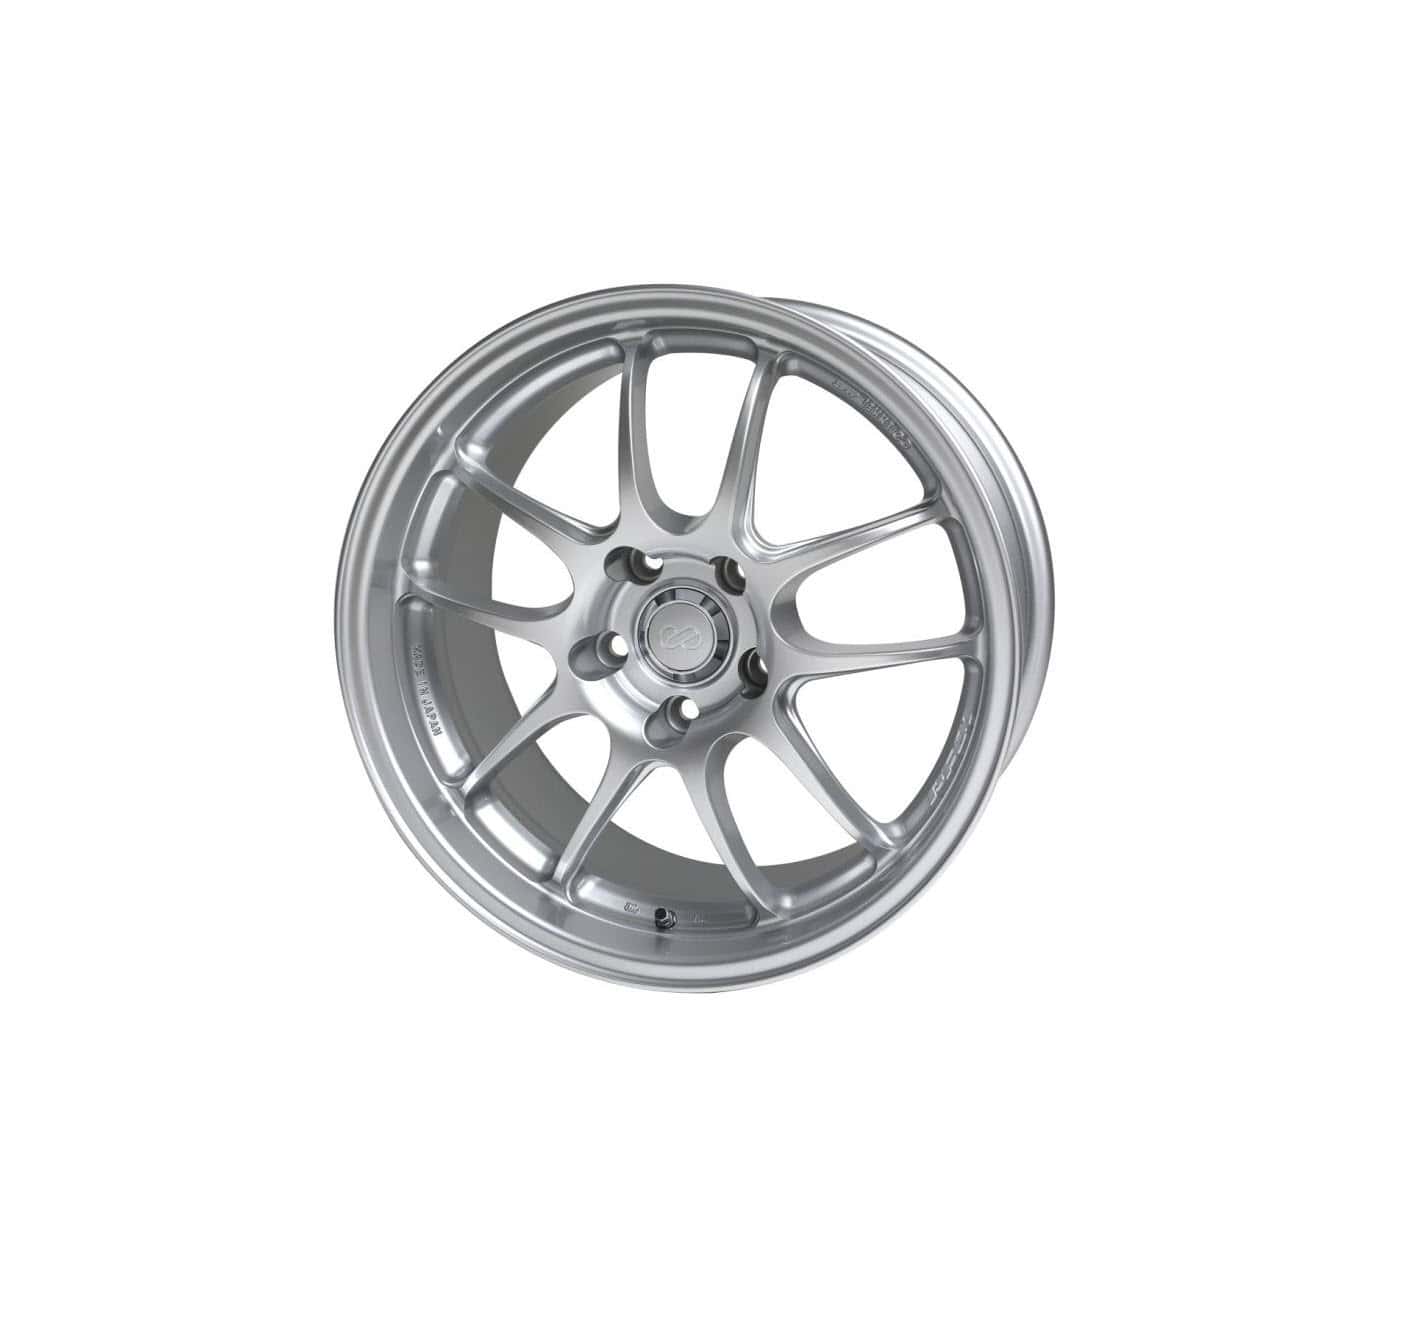 Enkei PF01 18x8.5 5x114.3 48mm - Silver Wheel - Dirty Racing Products